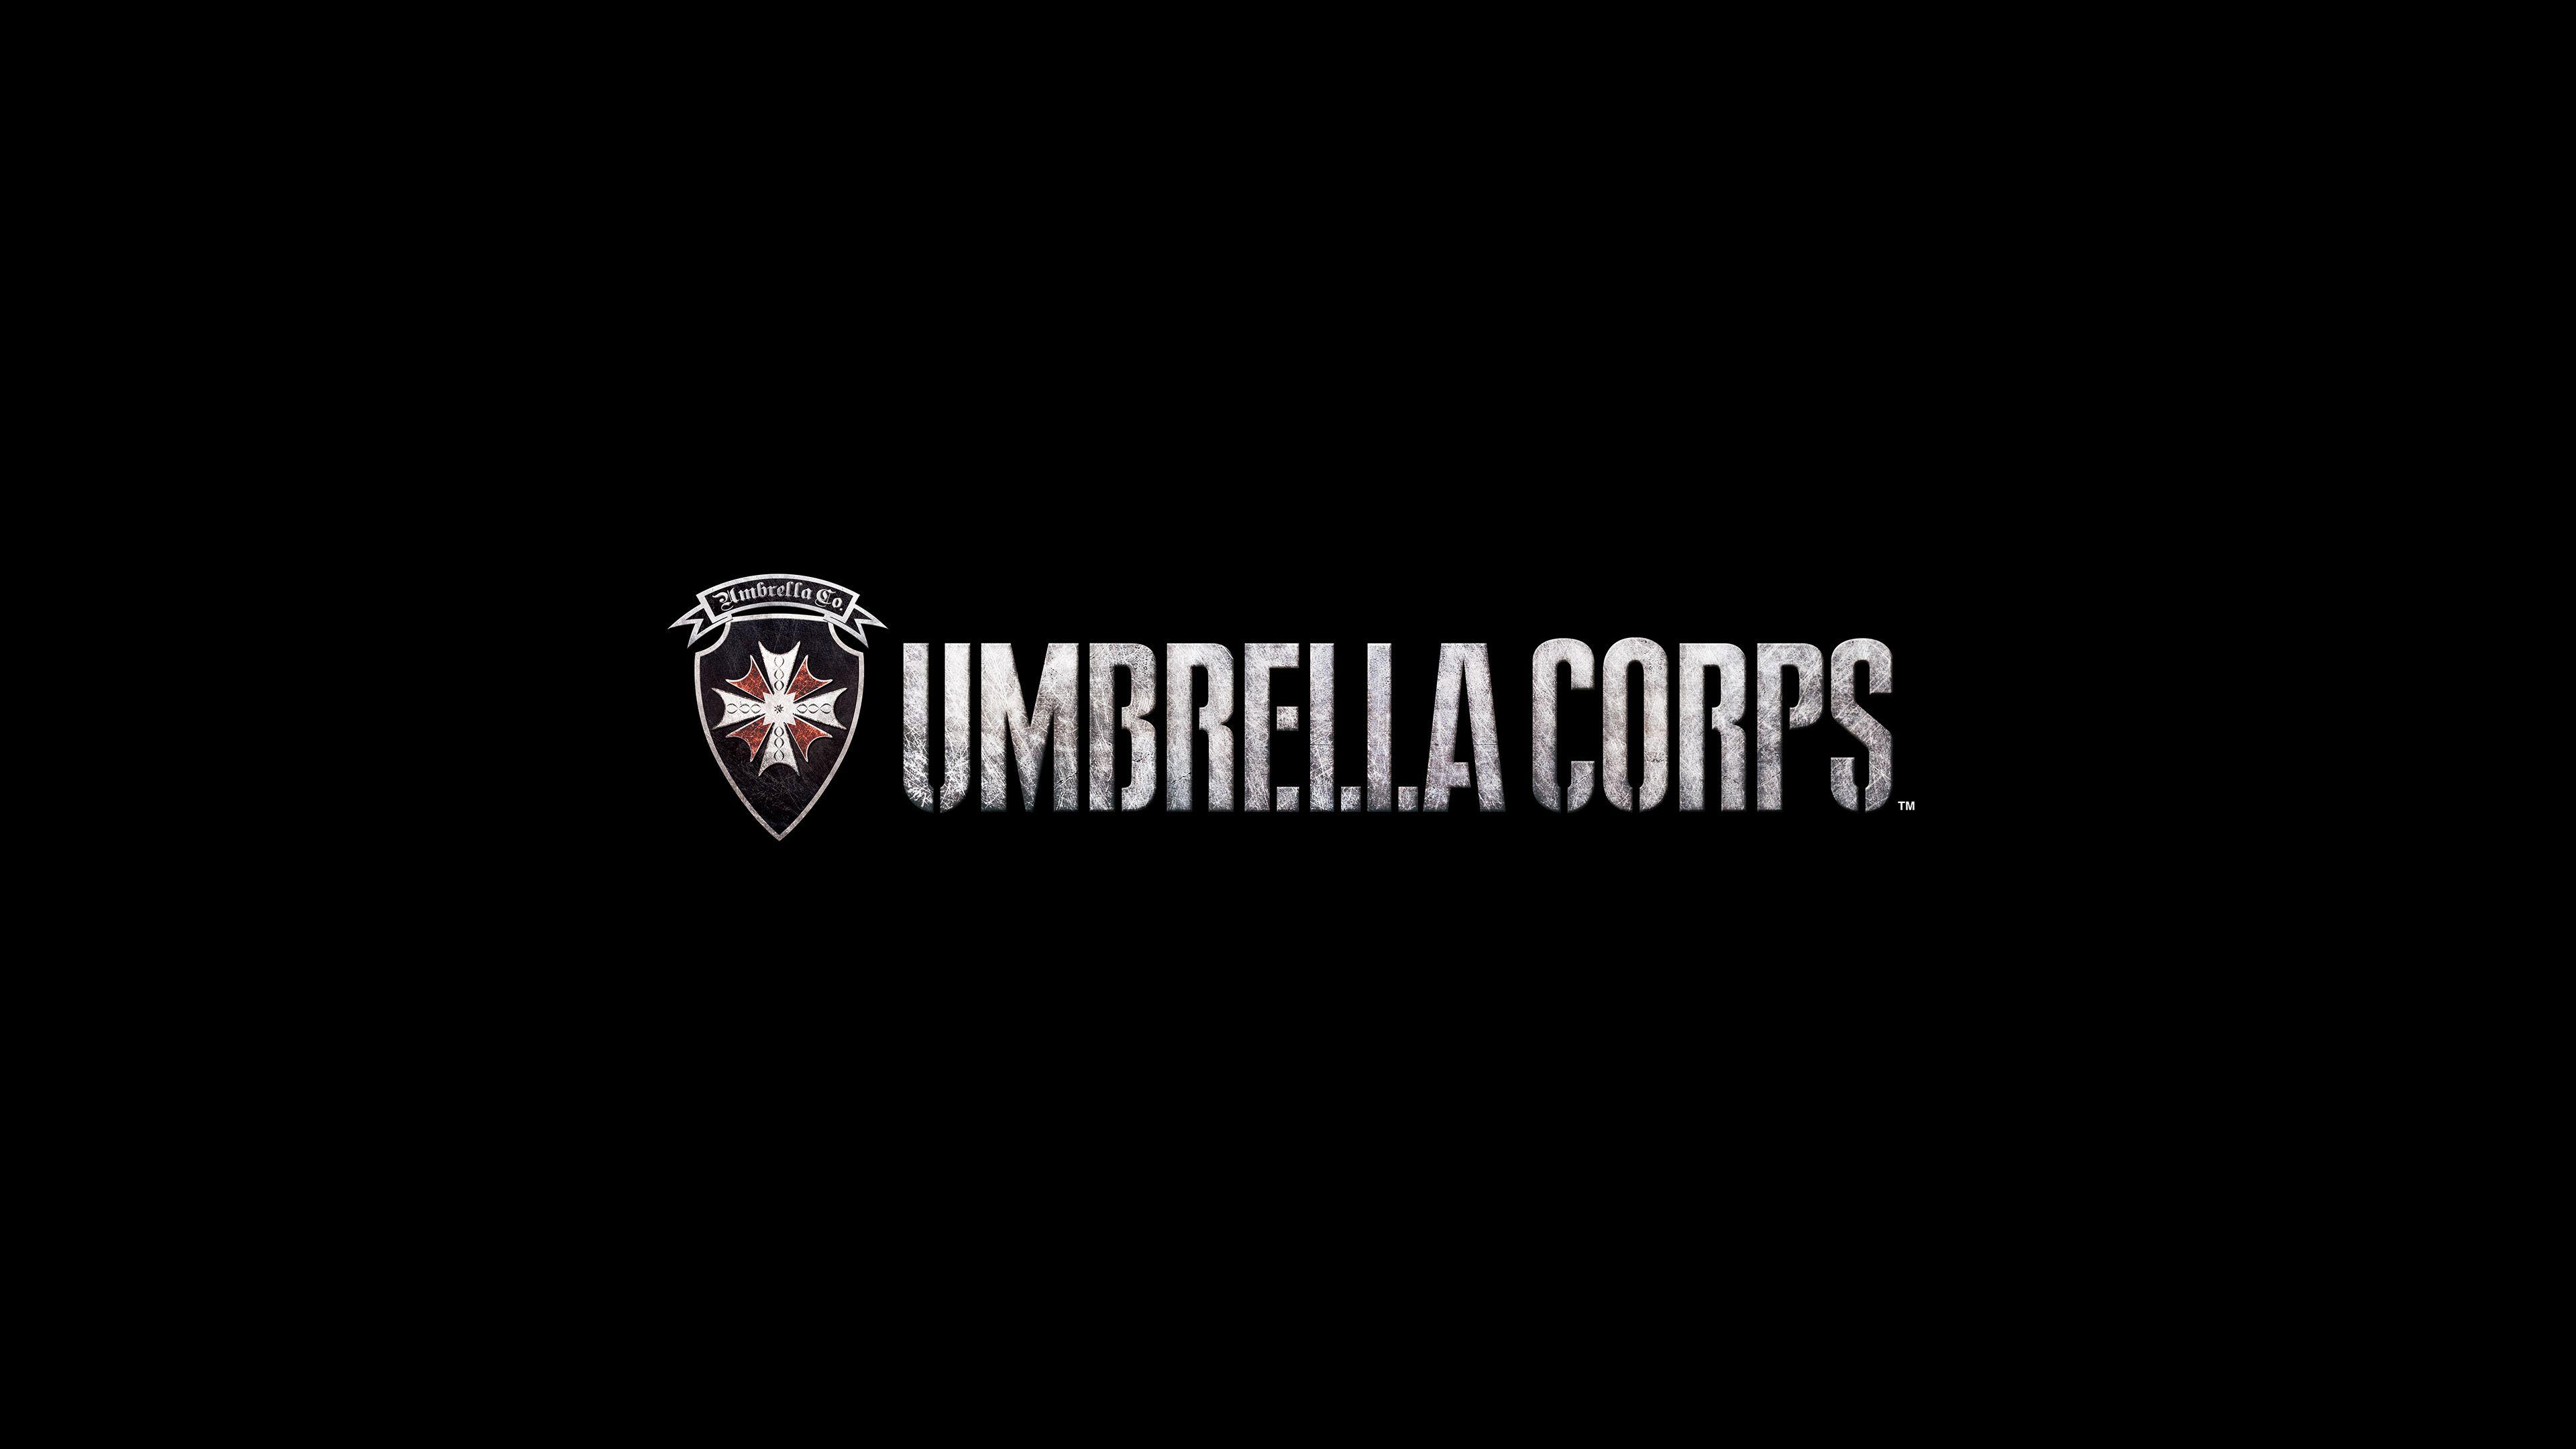 Umbrella Corps Logo, HD Games, 4k Wallpaper, Image, Background